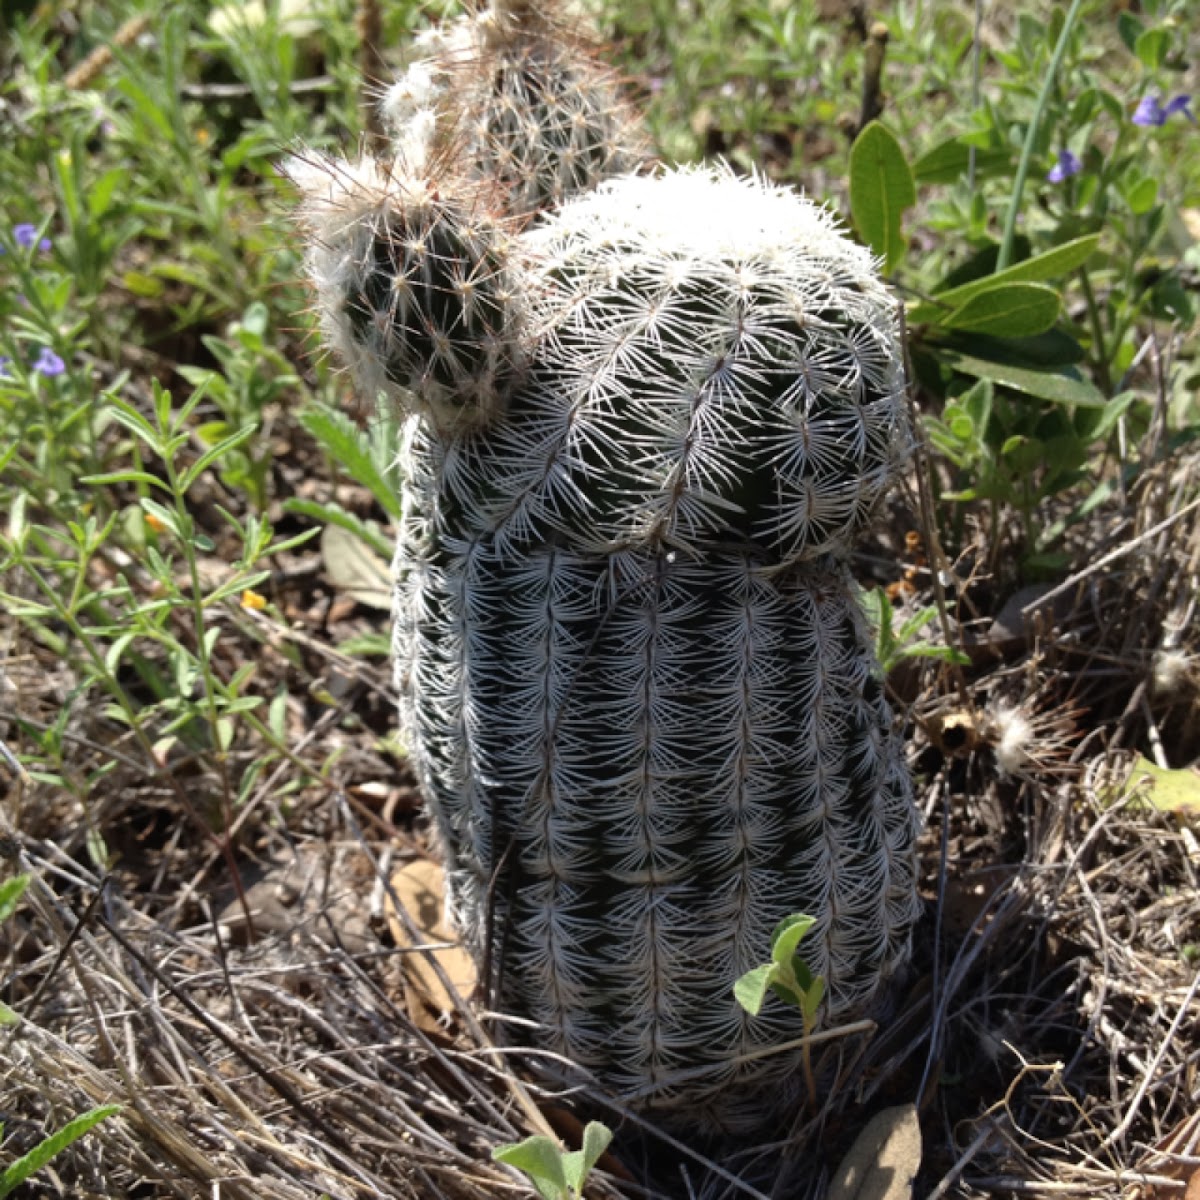 Lace cactus